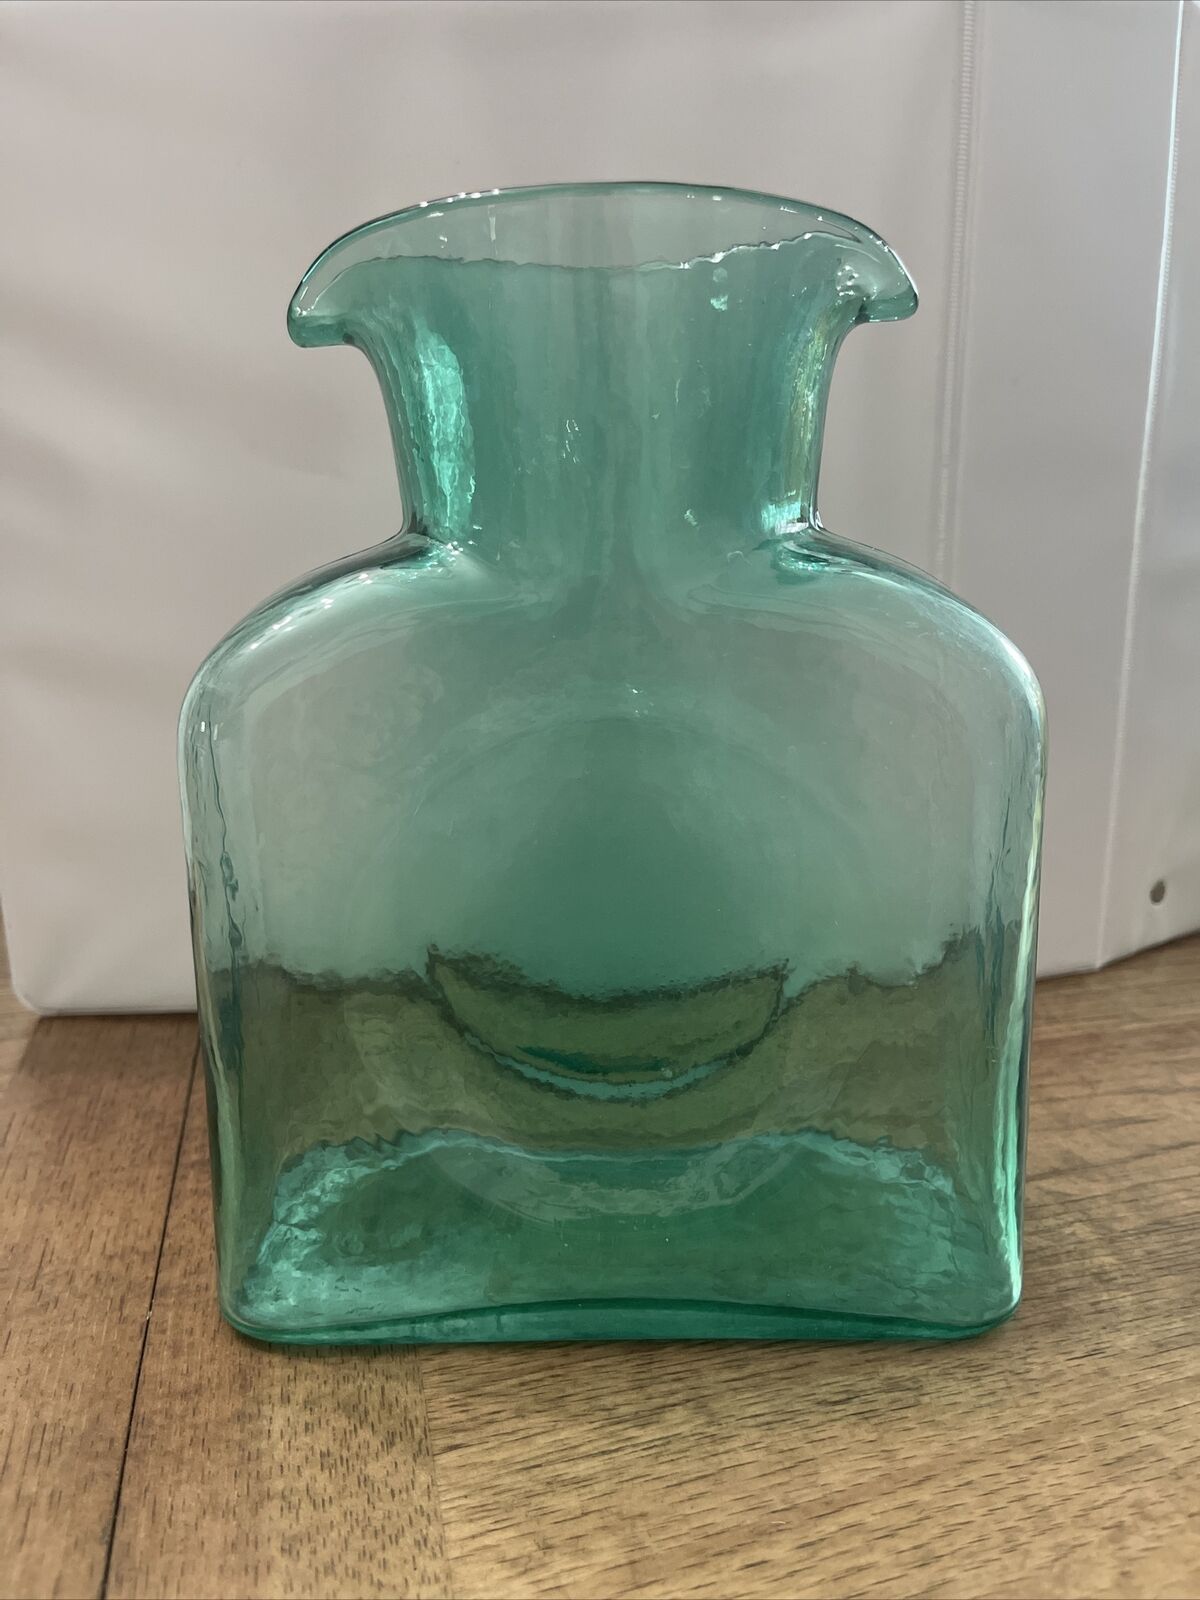 Blenco, vintage glass  blown, double spout pitcher, Teal Green